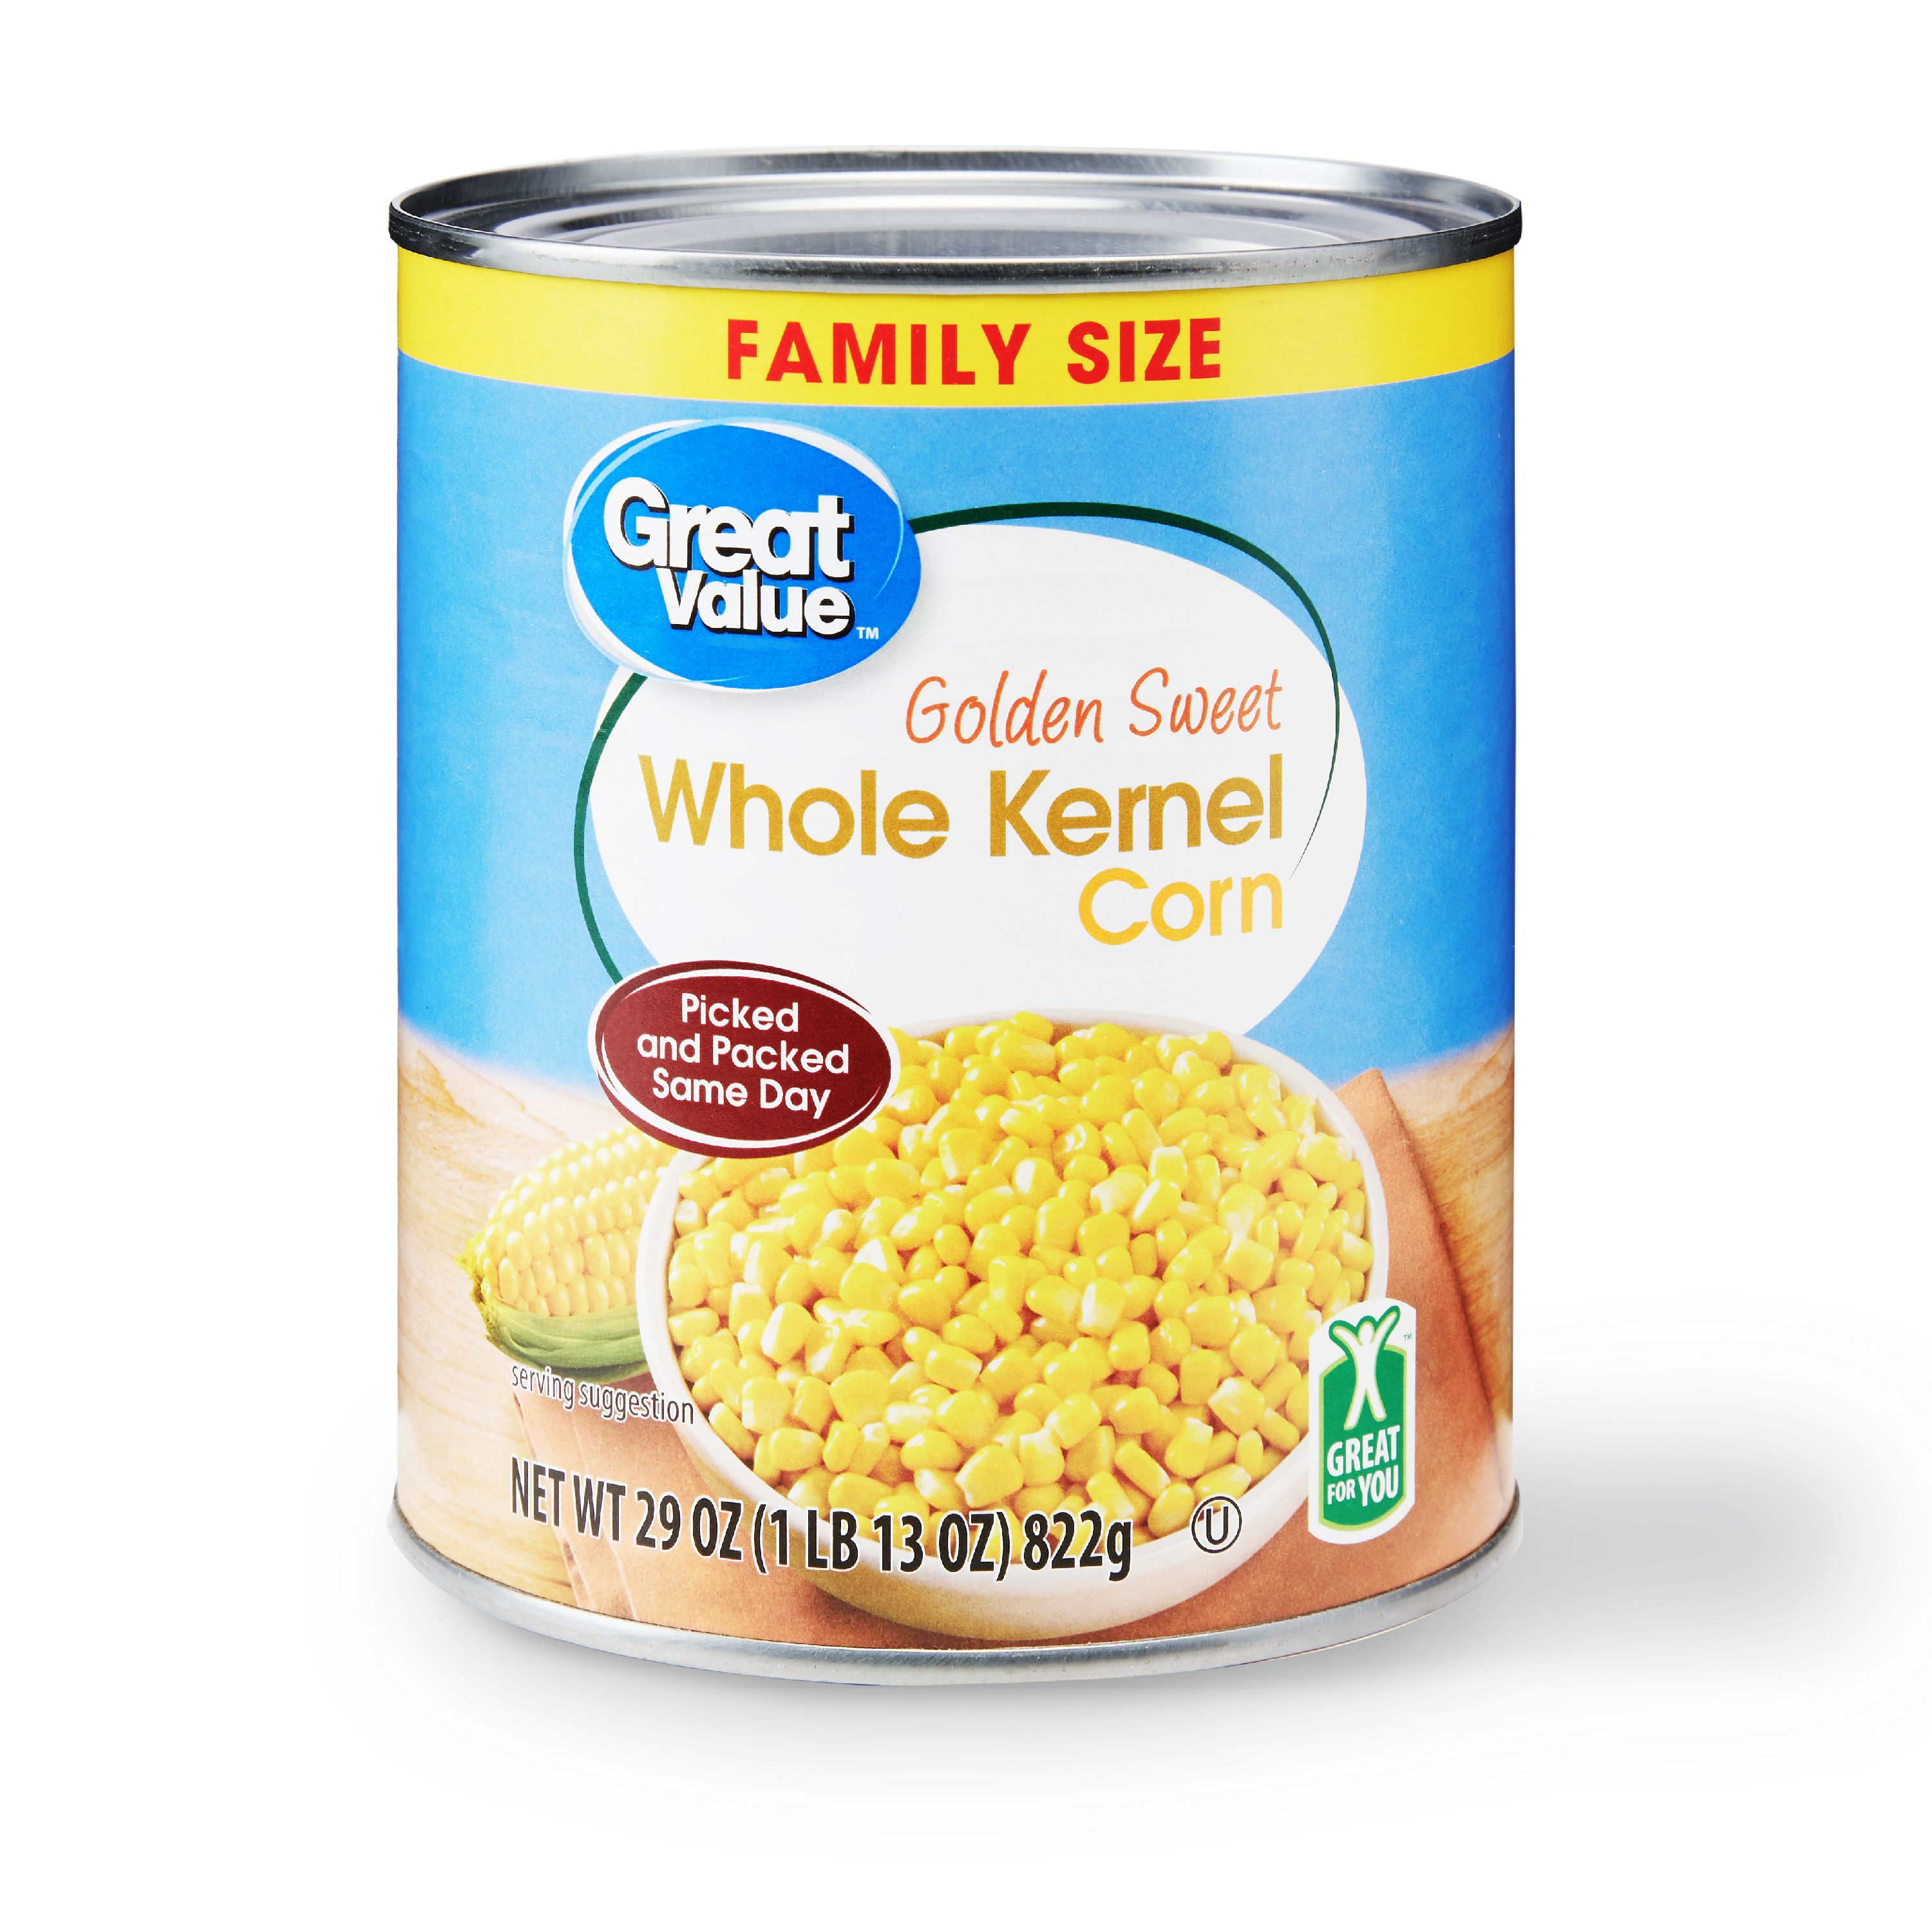 Great Value Golden Sweet Whole Kernel Corn, 29 Oz Image